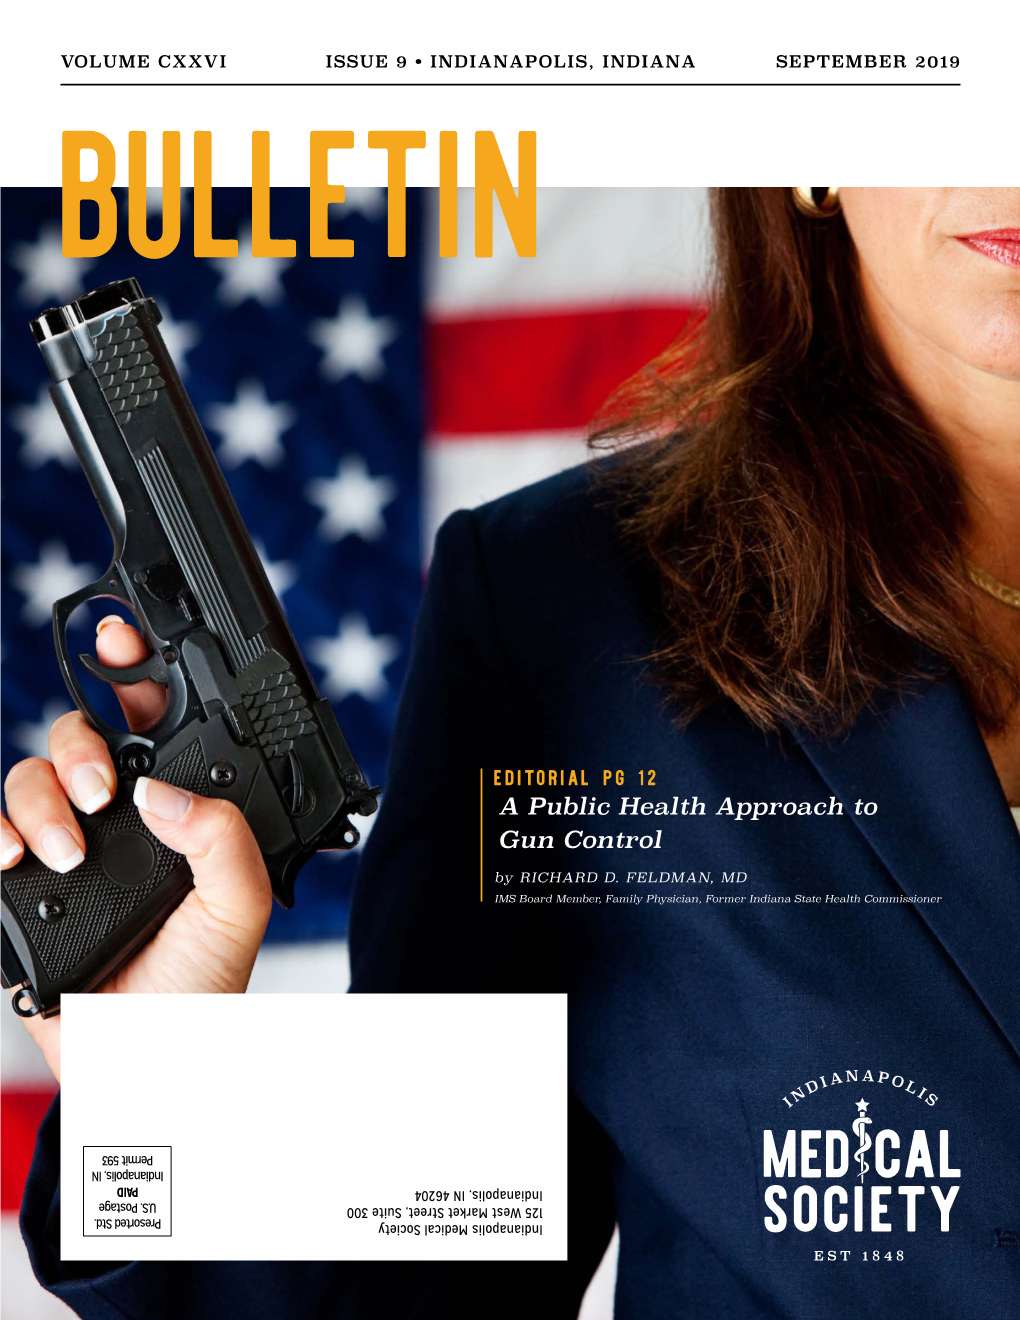 Editorial Pg 12 a Public Health Approach to Gun Control